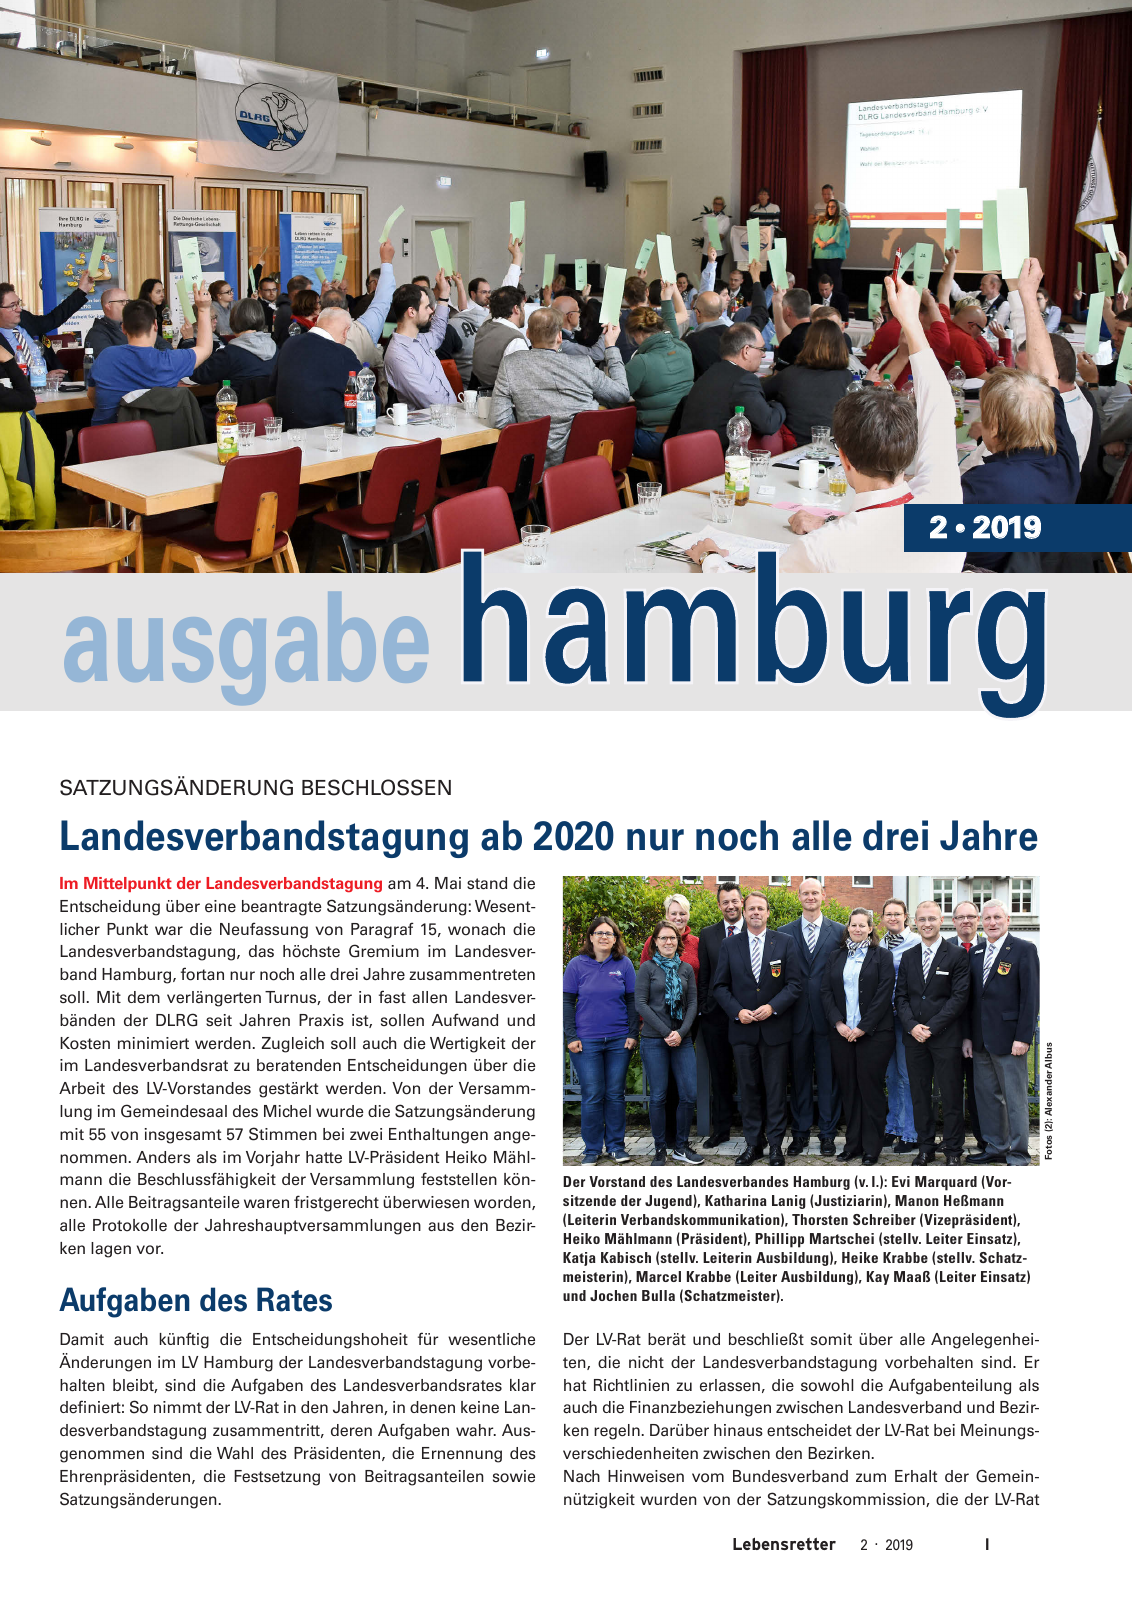 Vorschau Lebensretter 2/2019 - Hamburg Regionalausgabe Seite 3